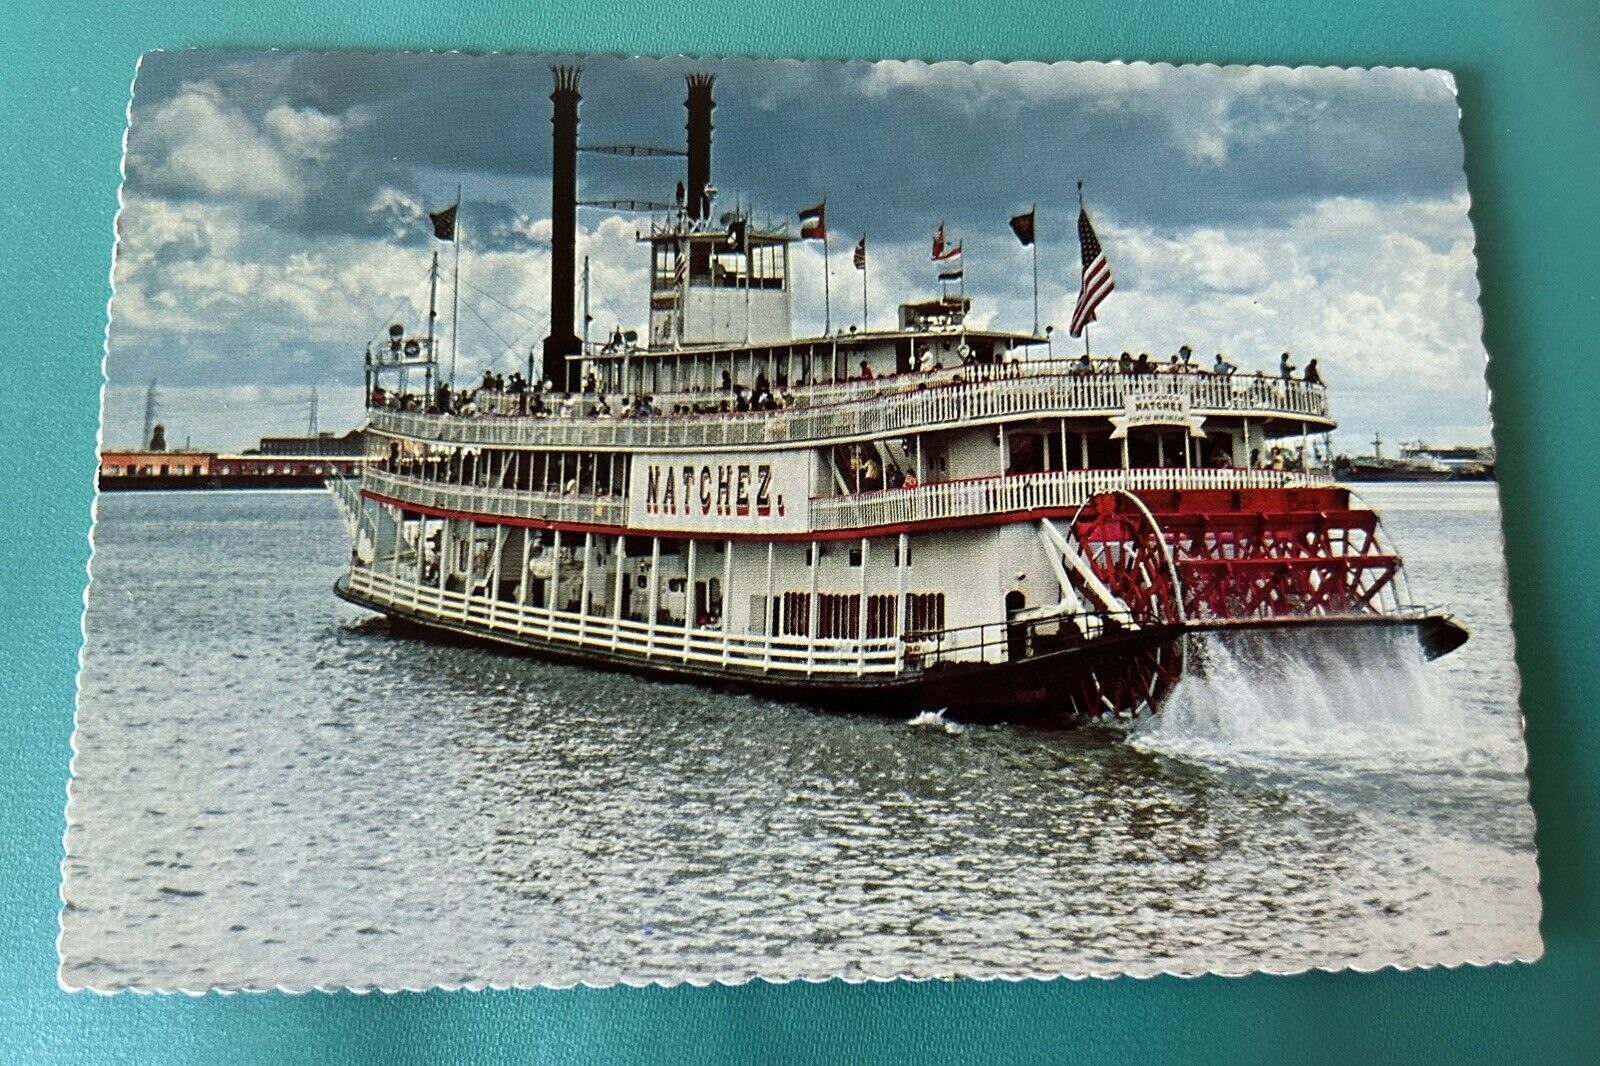 Sternwheeler Natchez New Orleans Ship Post Card